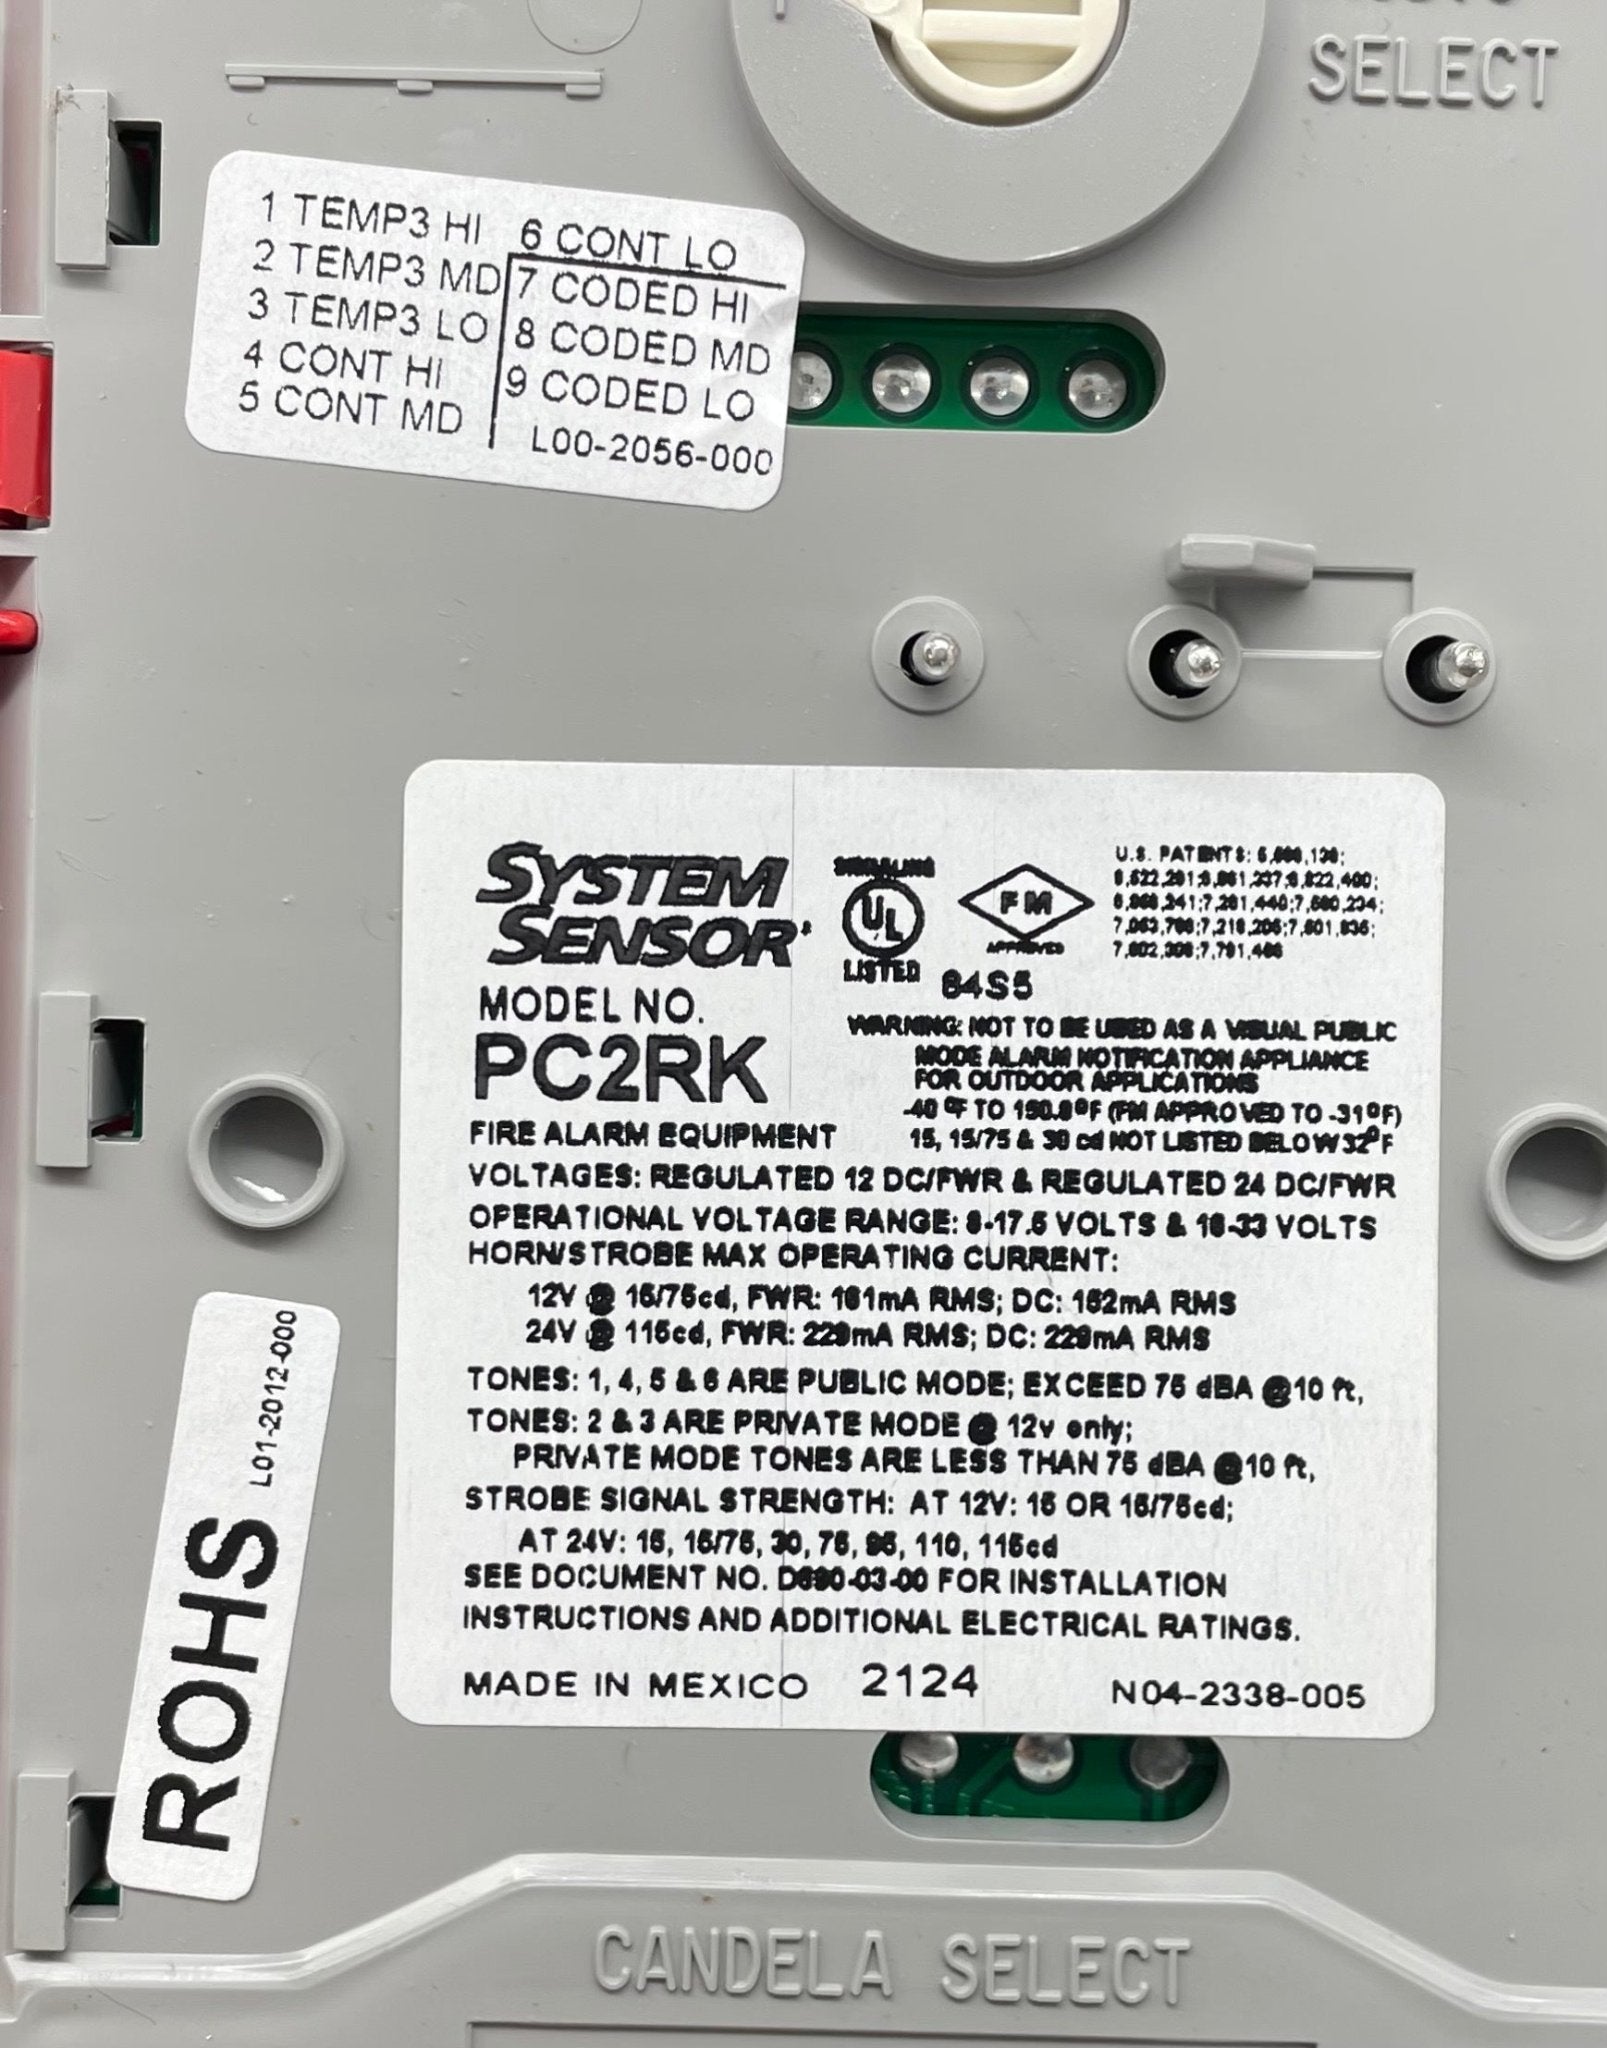 System Sensor PC2RK - The Fire Alarm Supplier